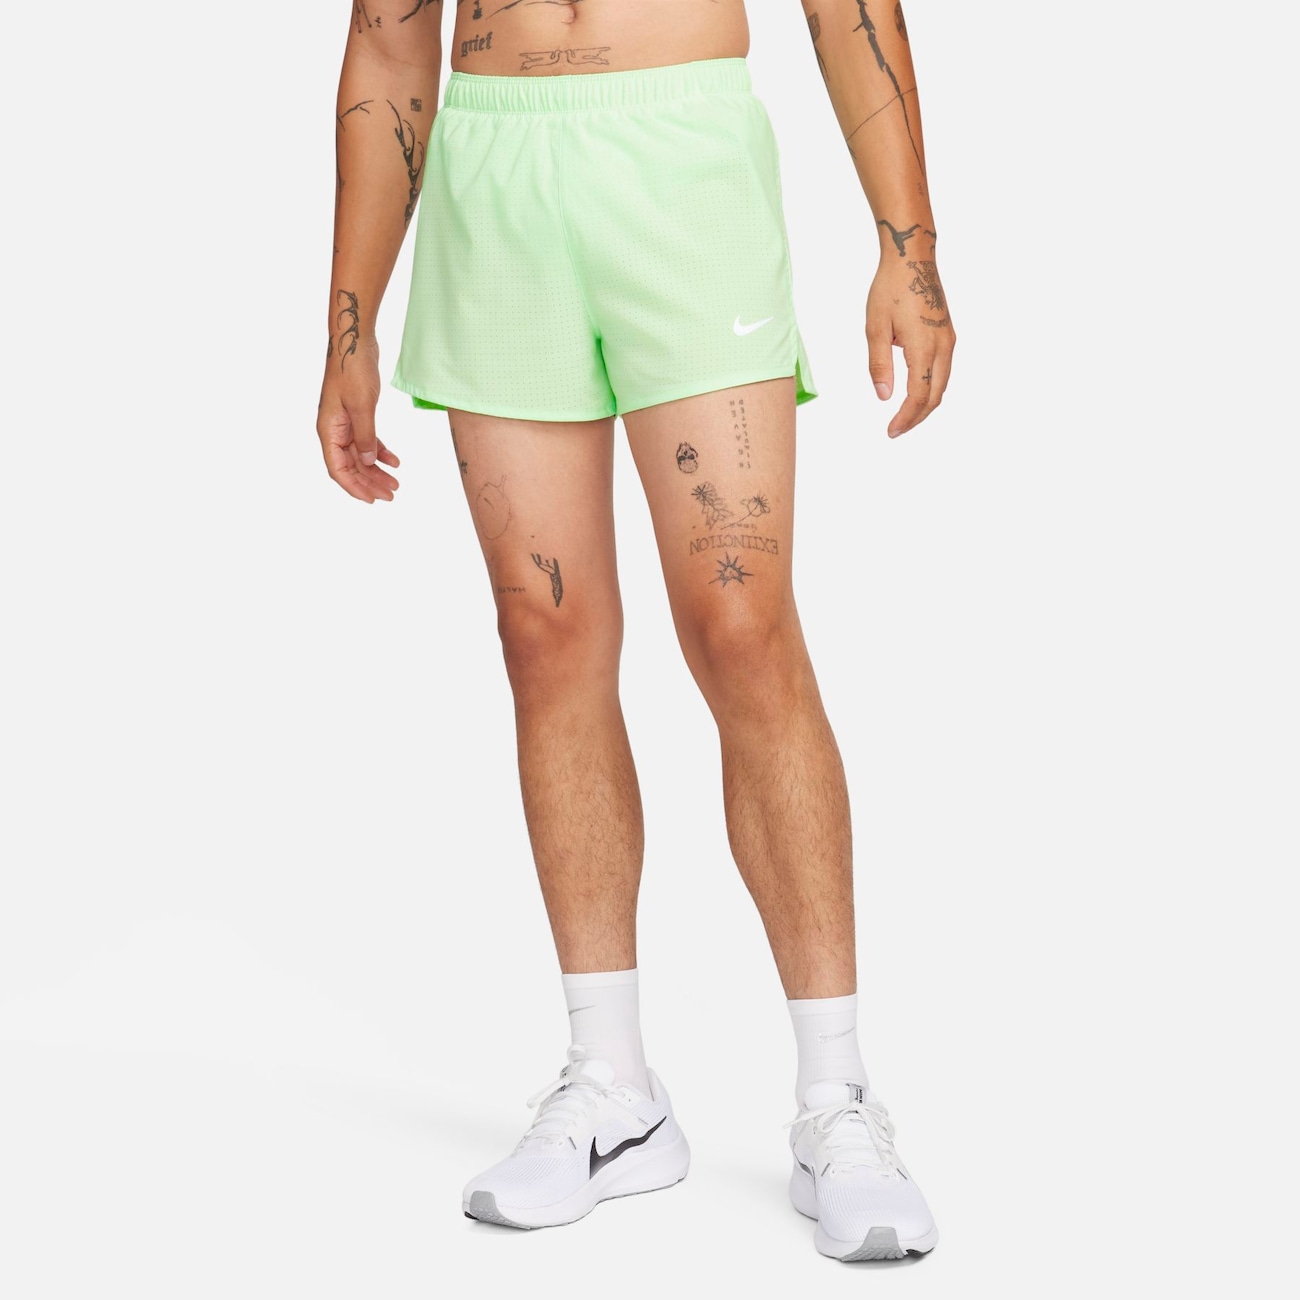 Shorts Nike Dri-FIT Fast Masculino